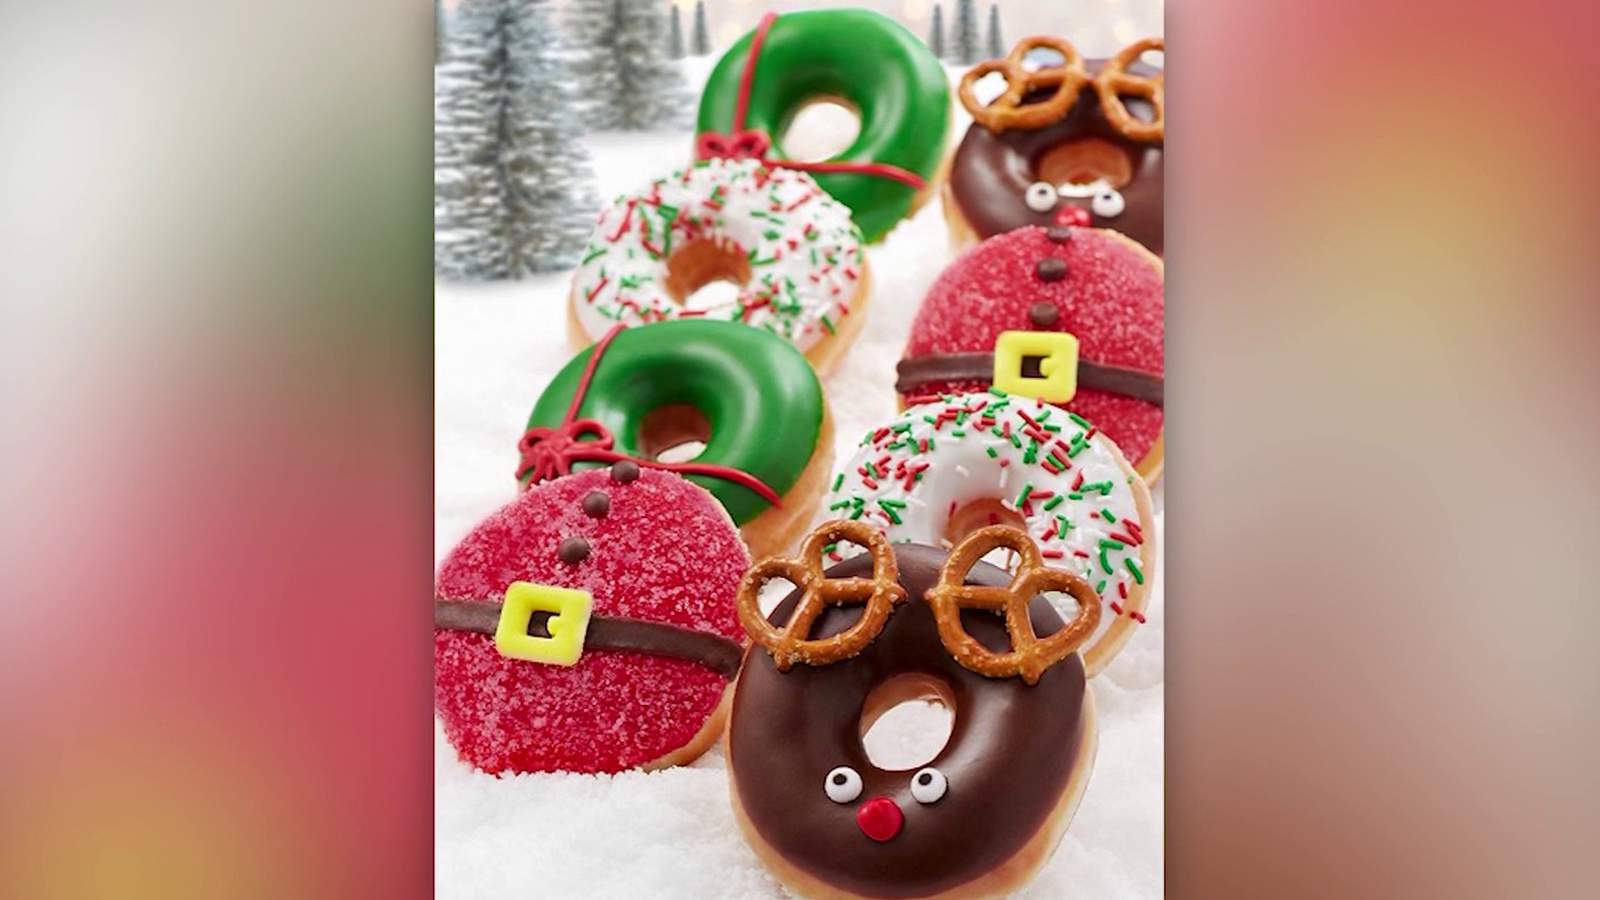 Krispy Kreme introduces new holiday doughnuts